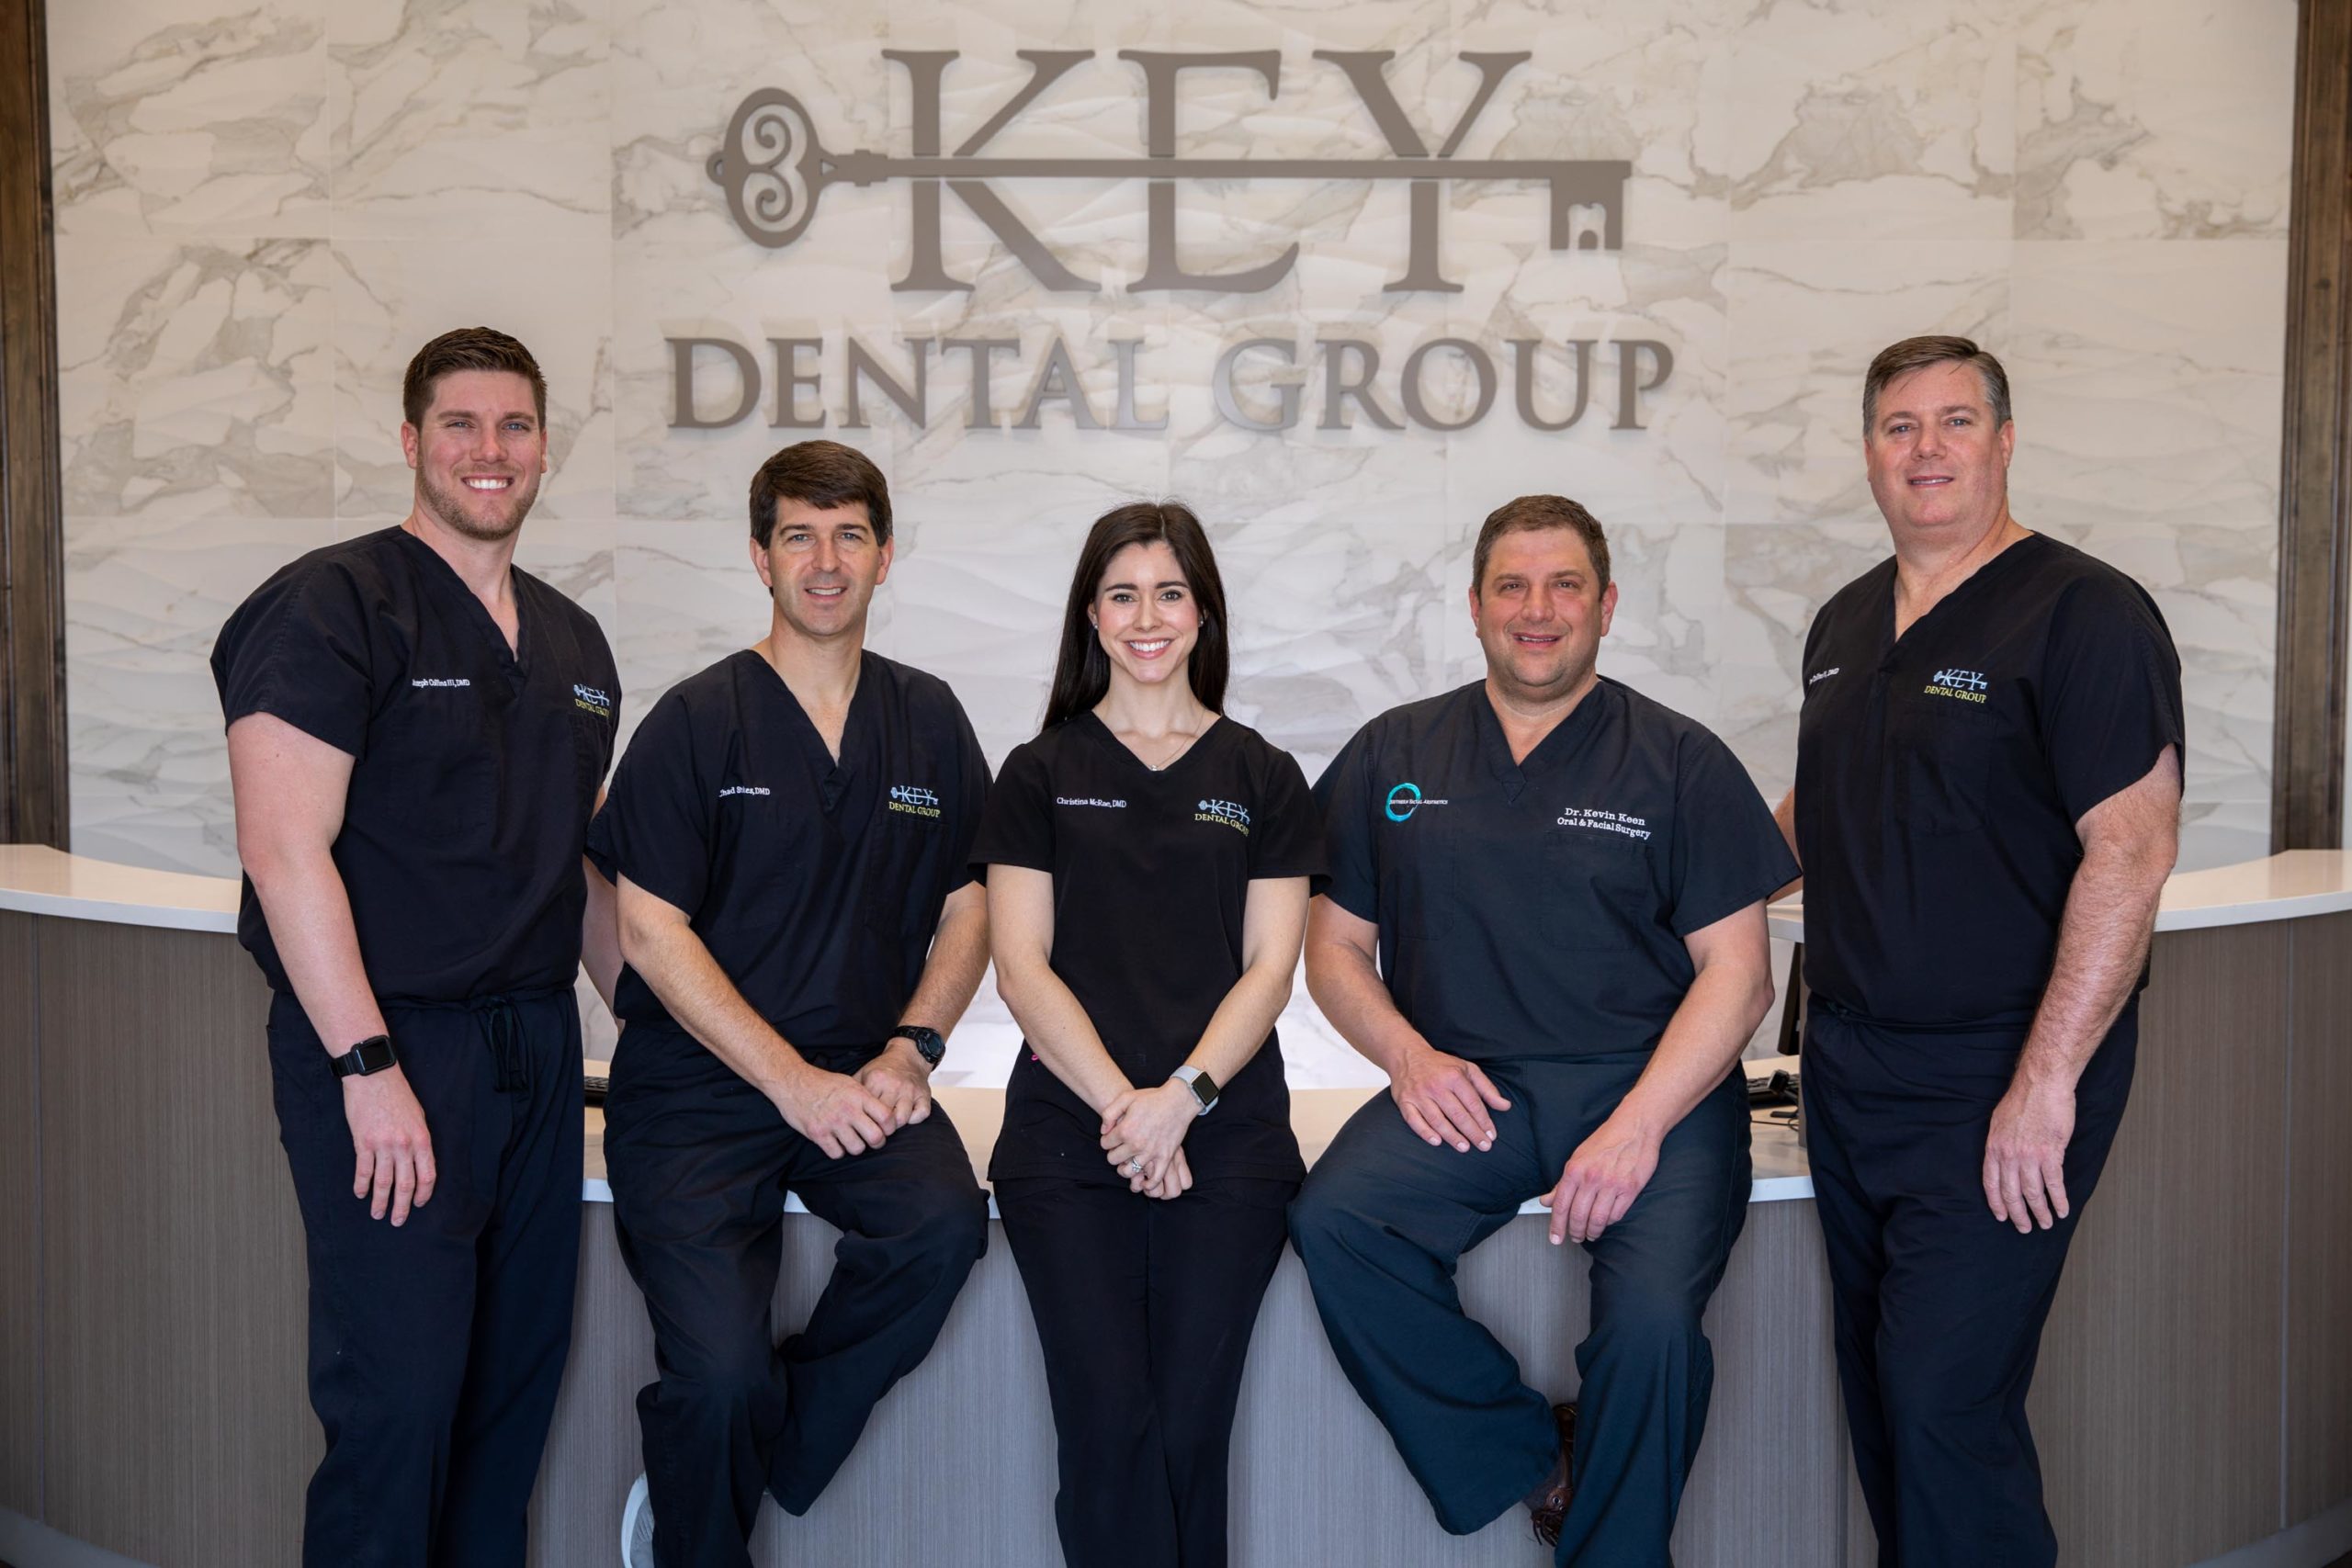 an image of key dental group.